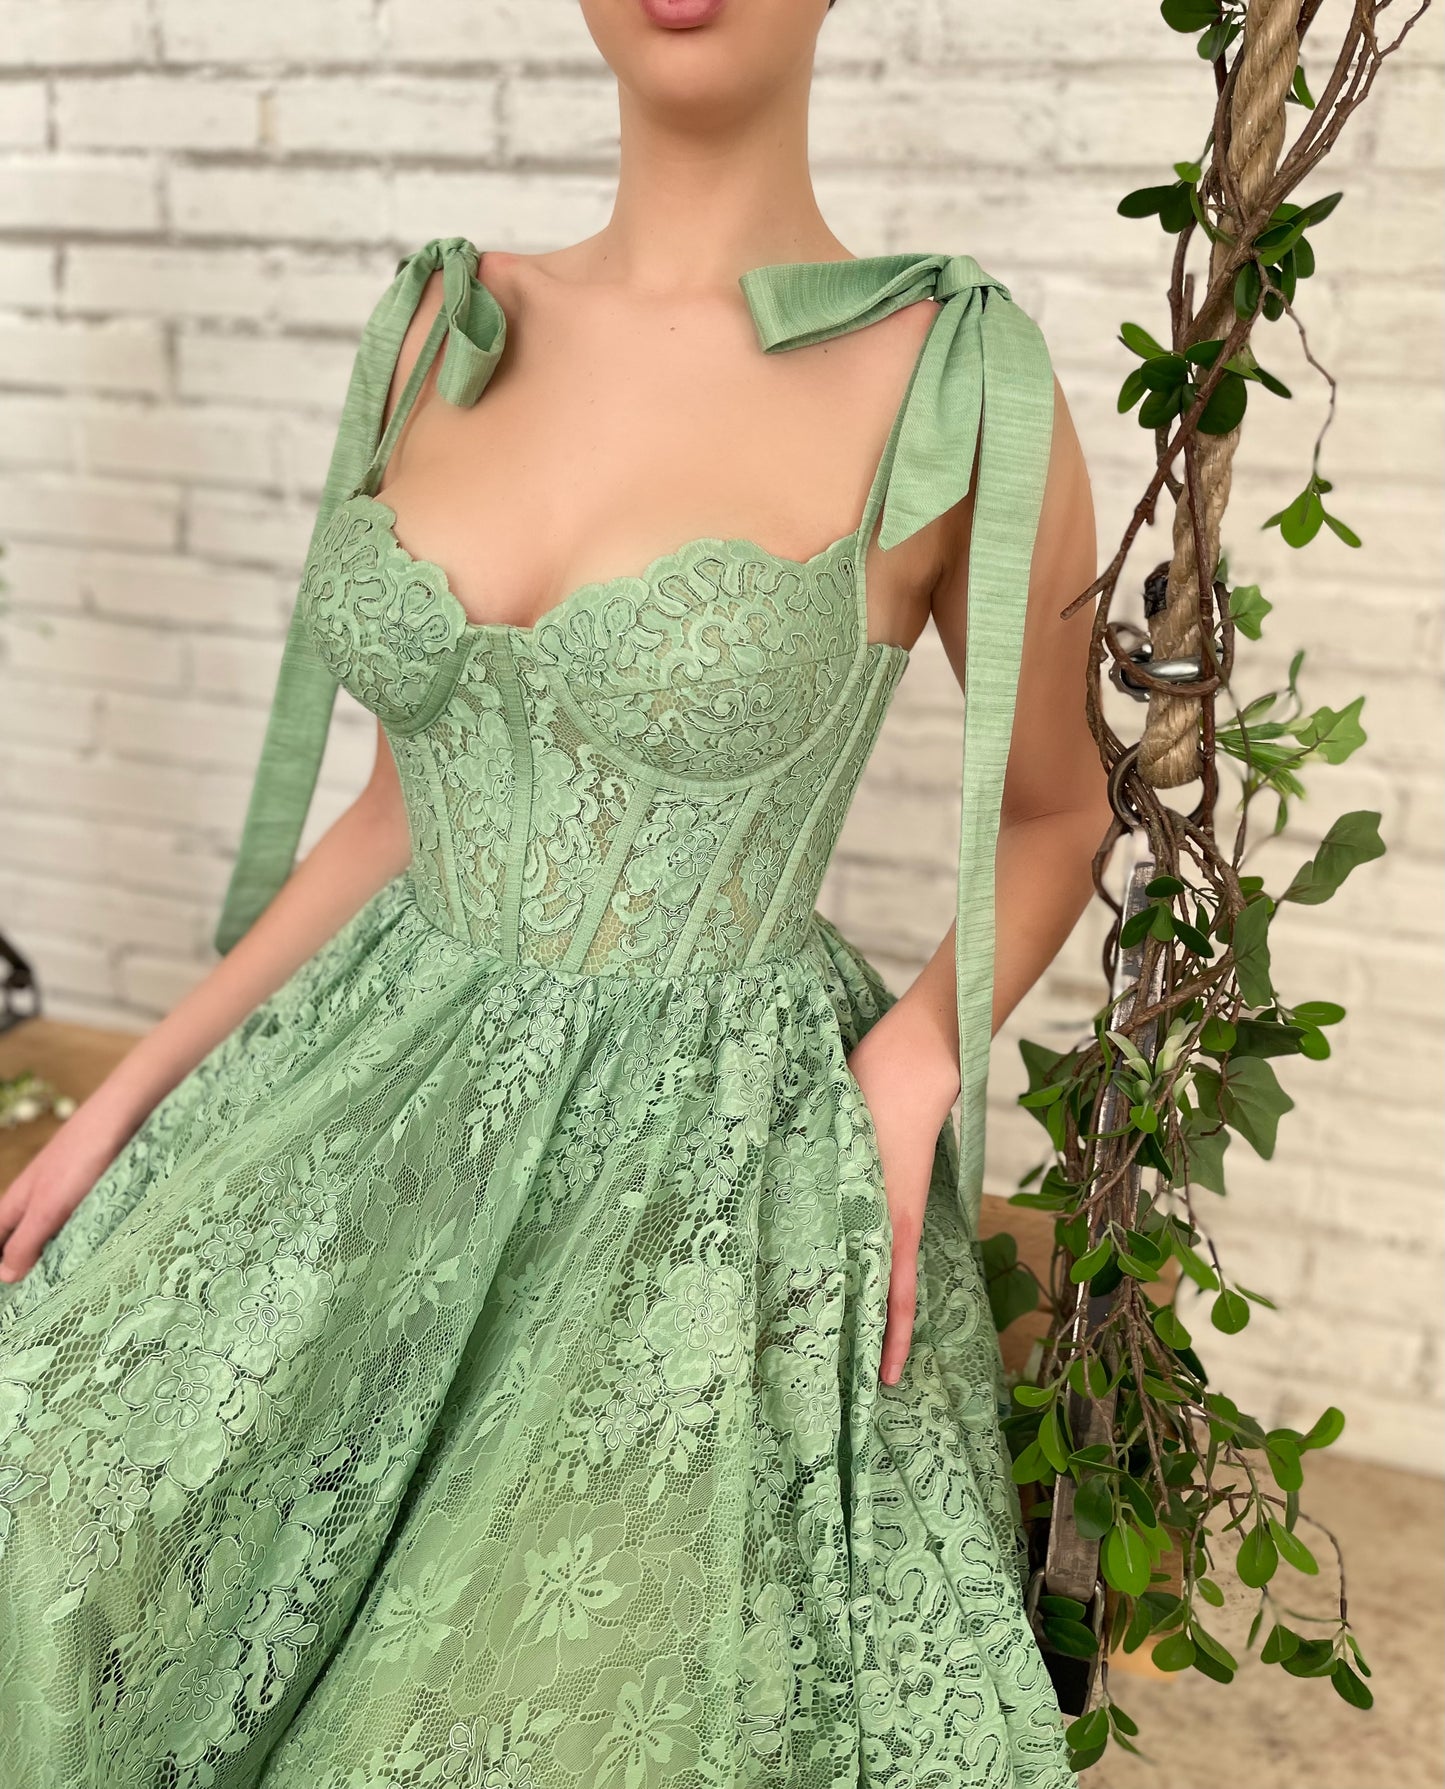 Green midi dress with bow straps